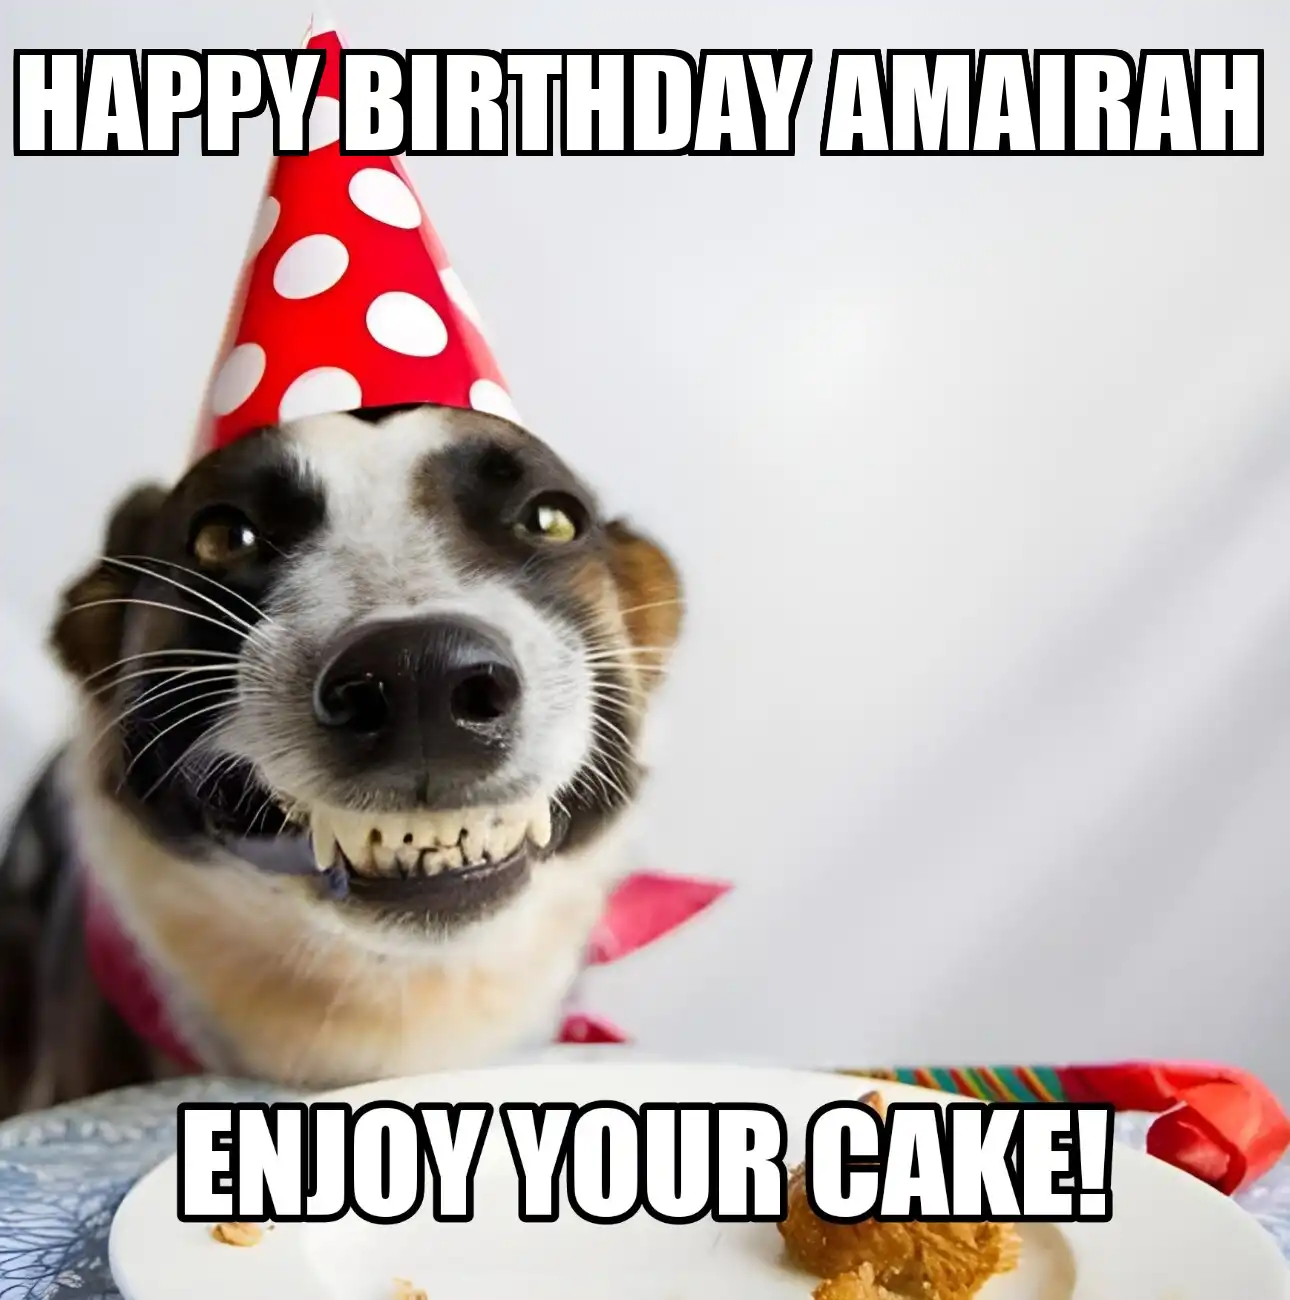 Happy Birthday Amairah Enjoy Your Cake Dog Meme